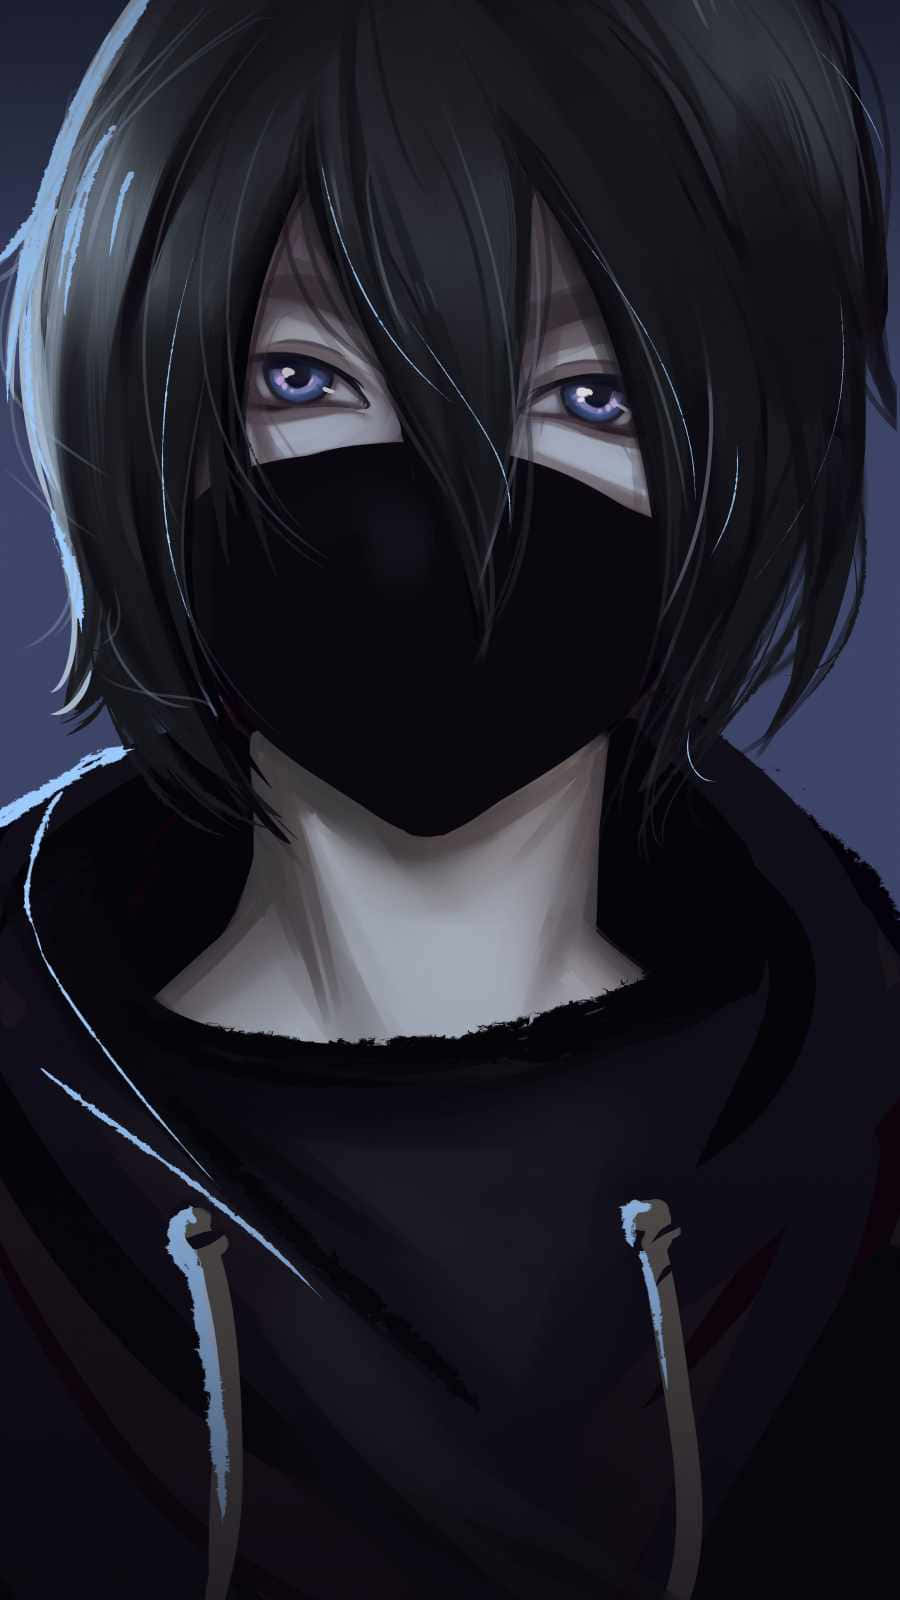 Anime Boy With Black Mask Background